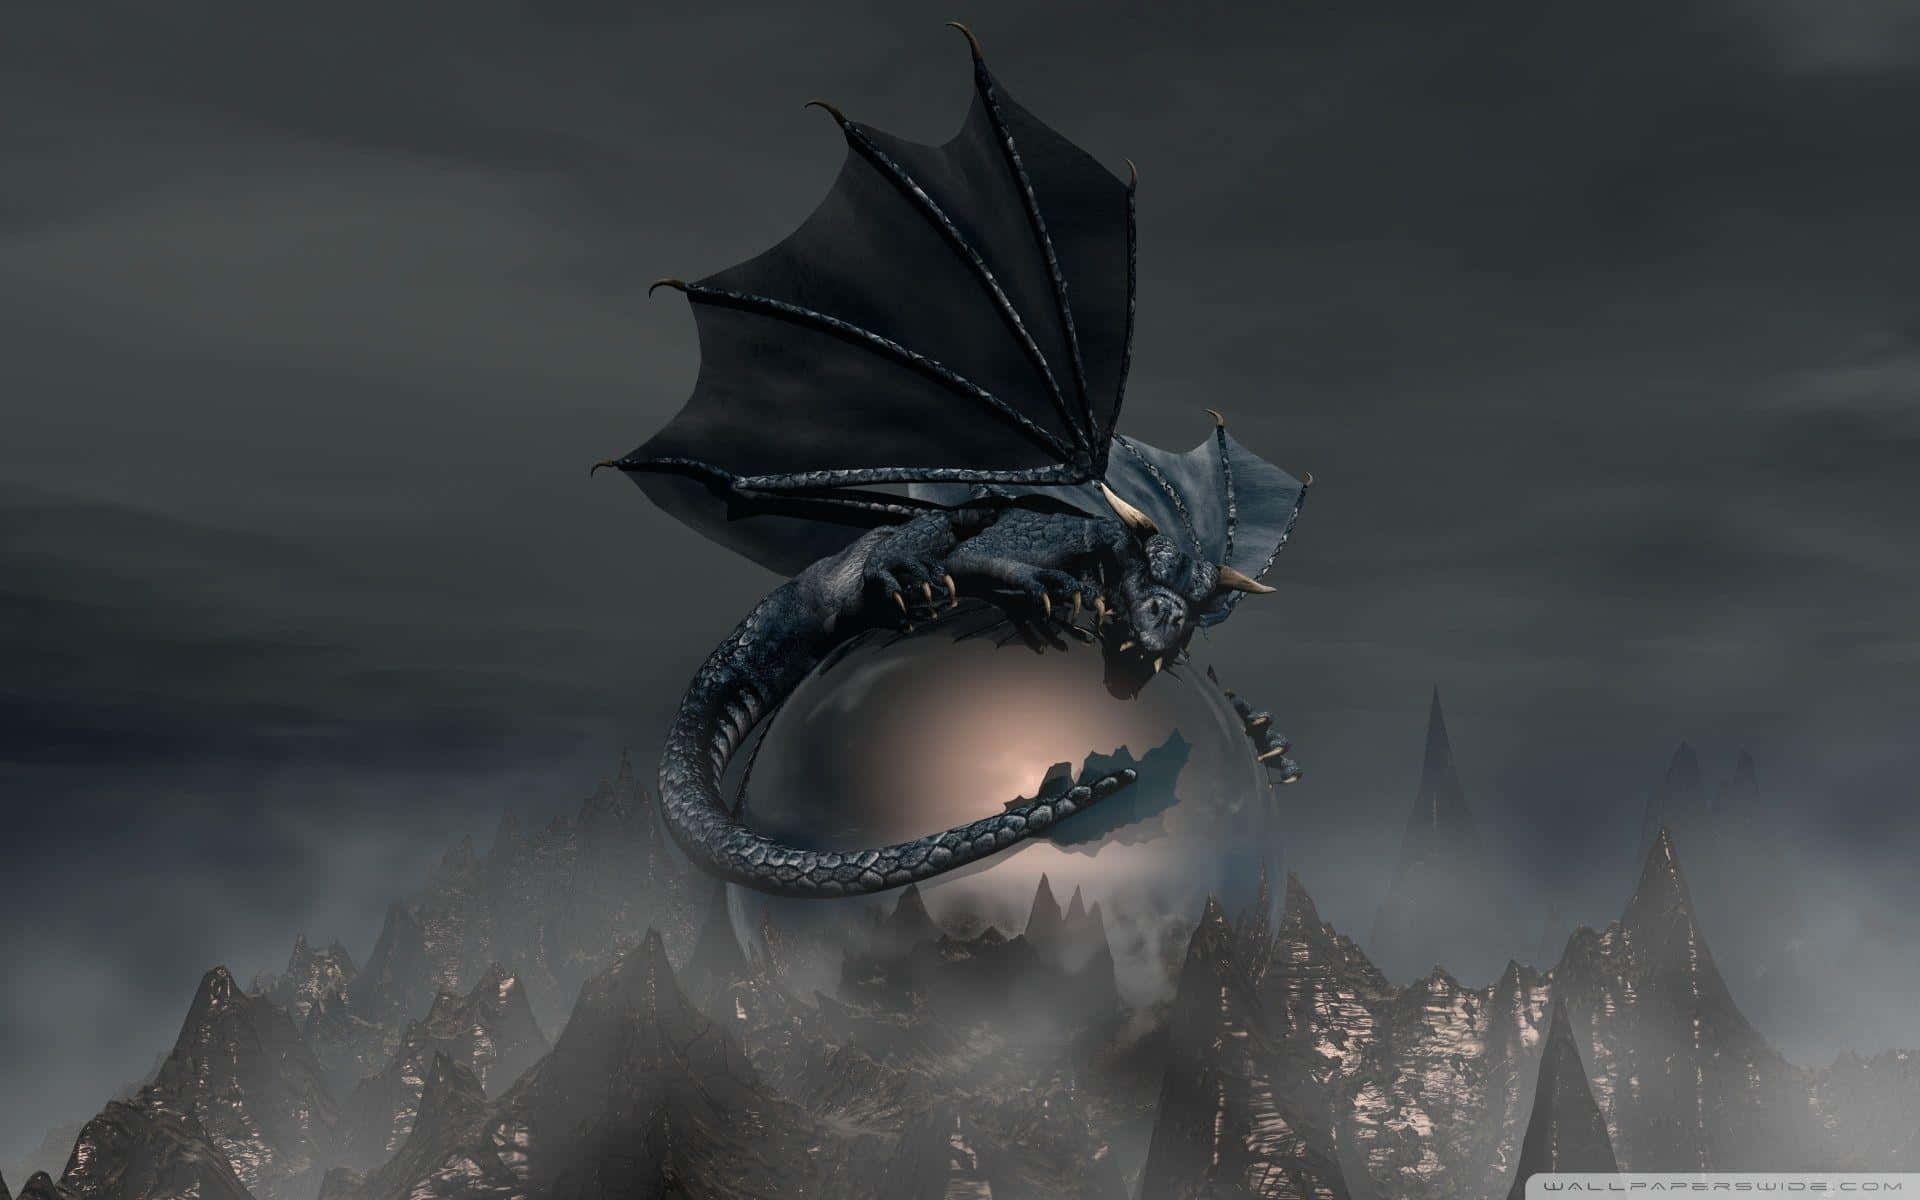 Black Dragon Flying Above Mountains Wallpaper